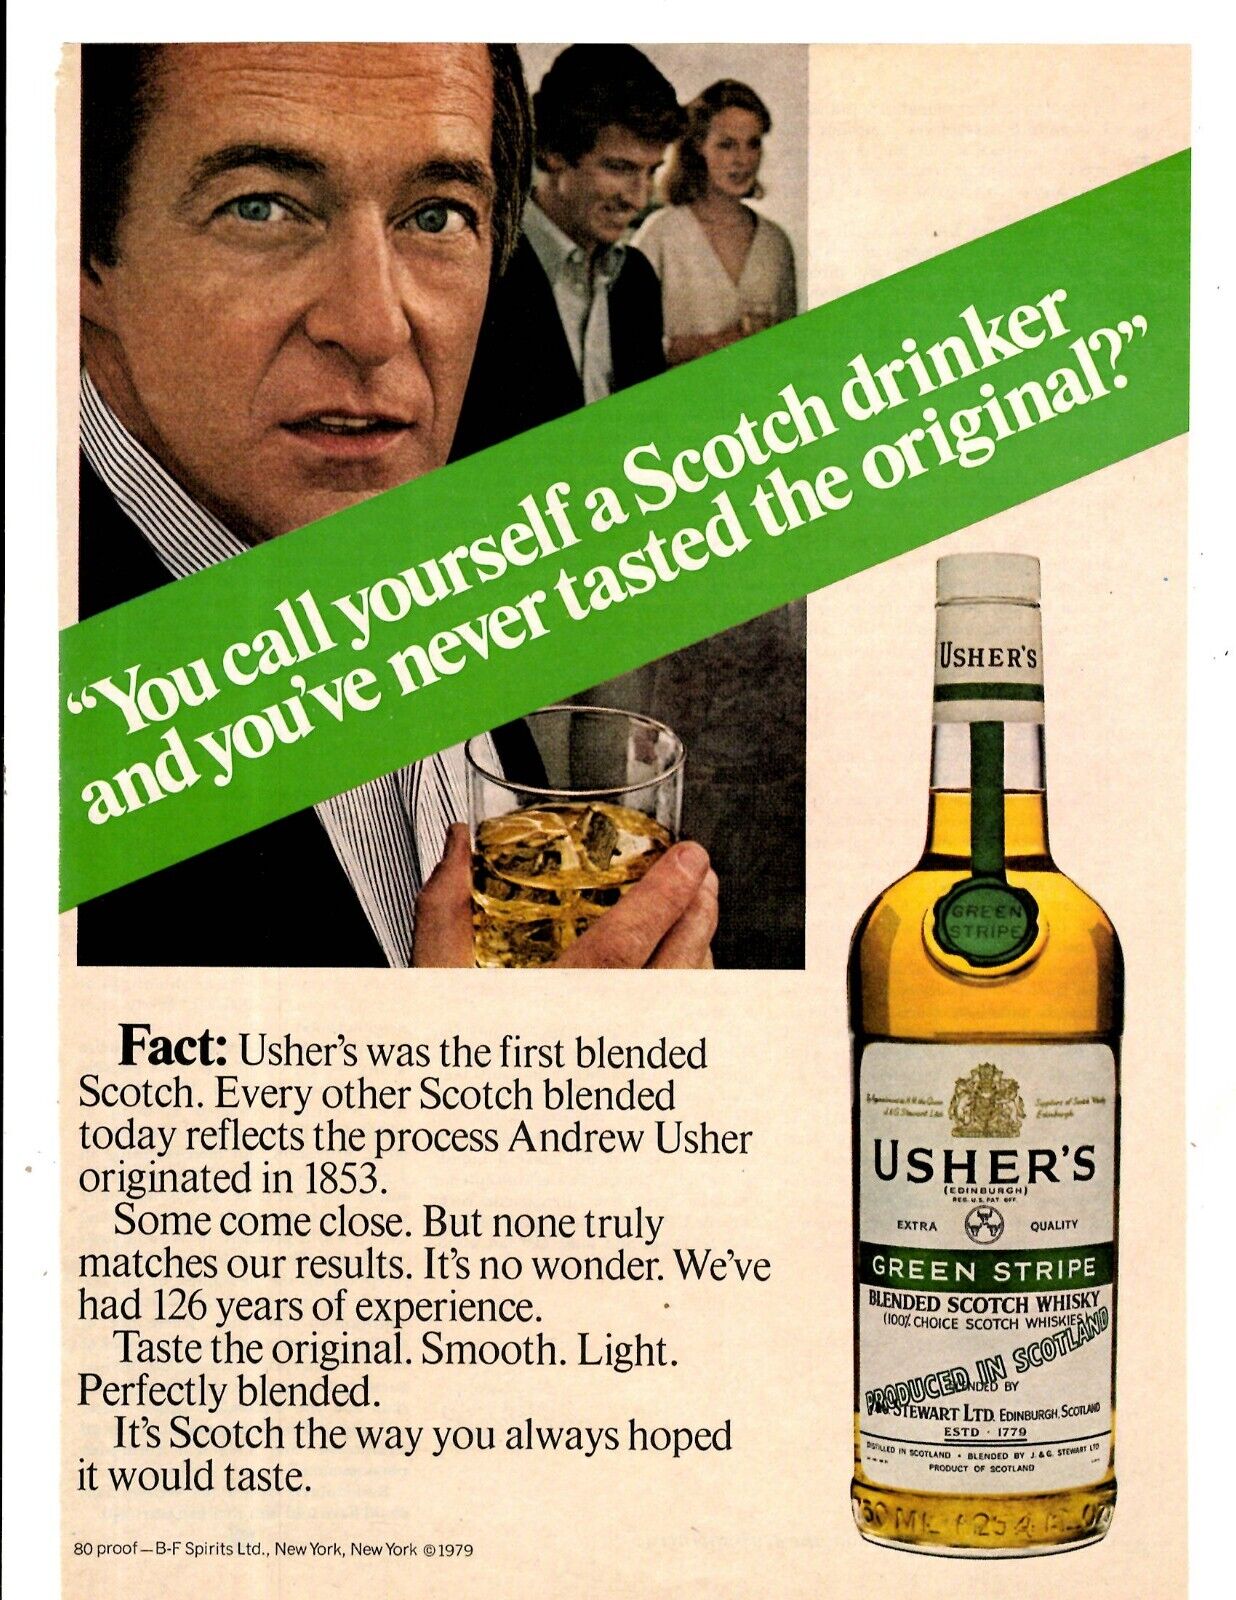 1980 Print Ad  Usher's Green Stripe Blended Scotch Whisky Taste the Original